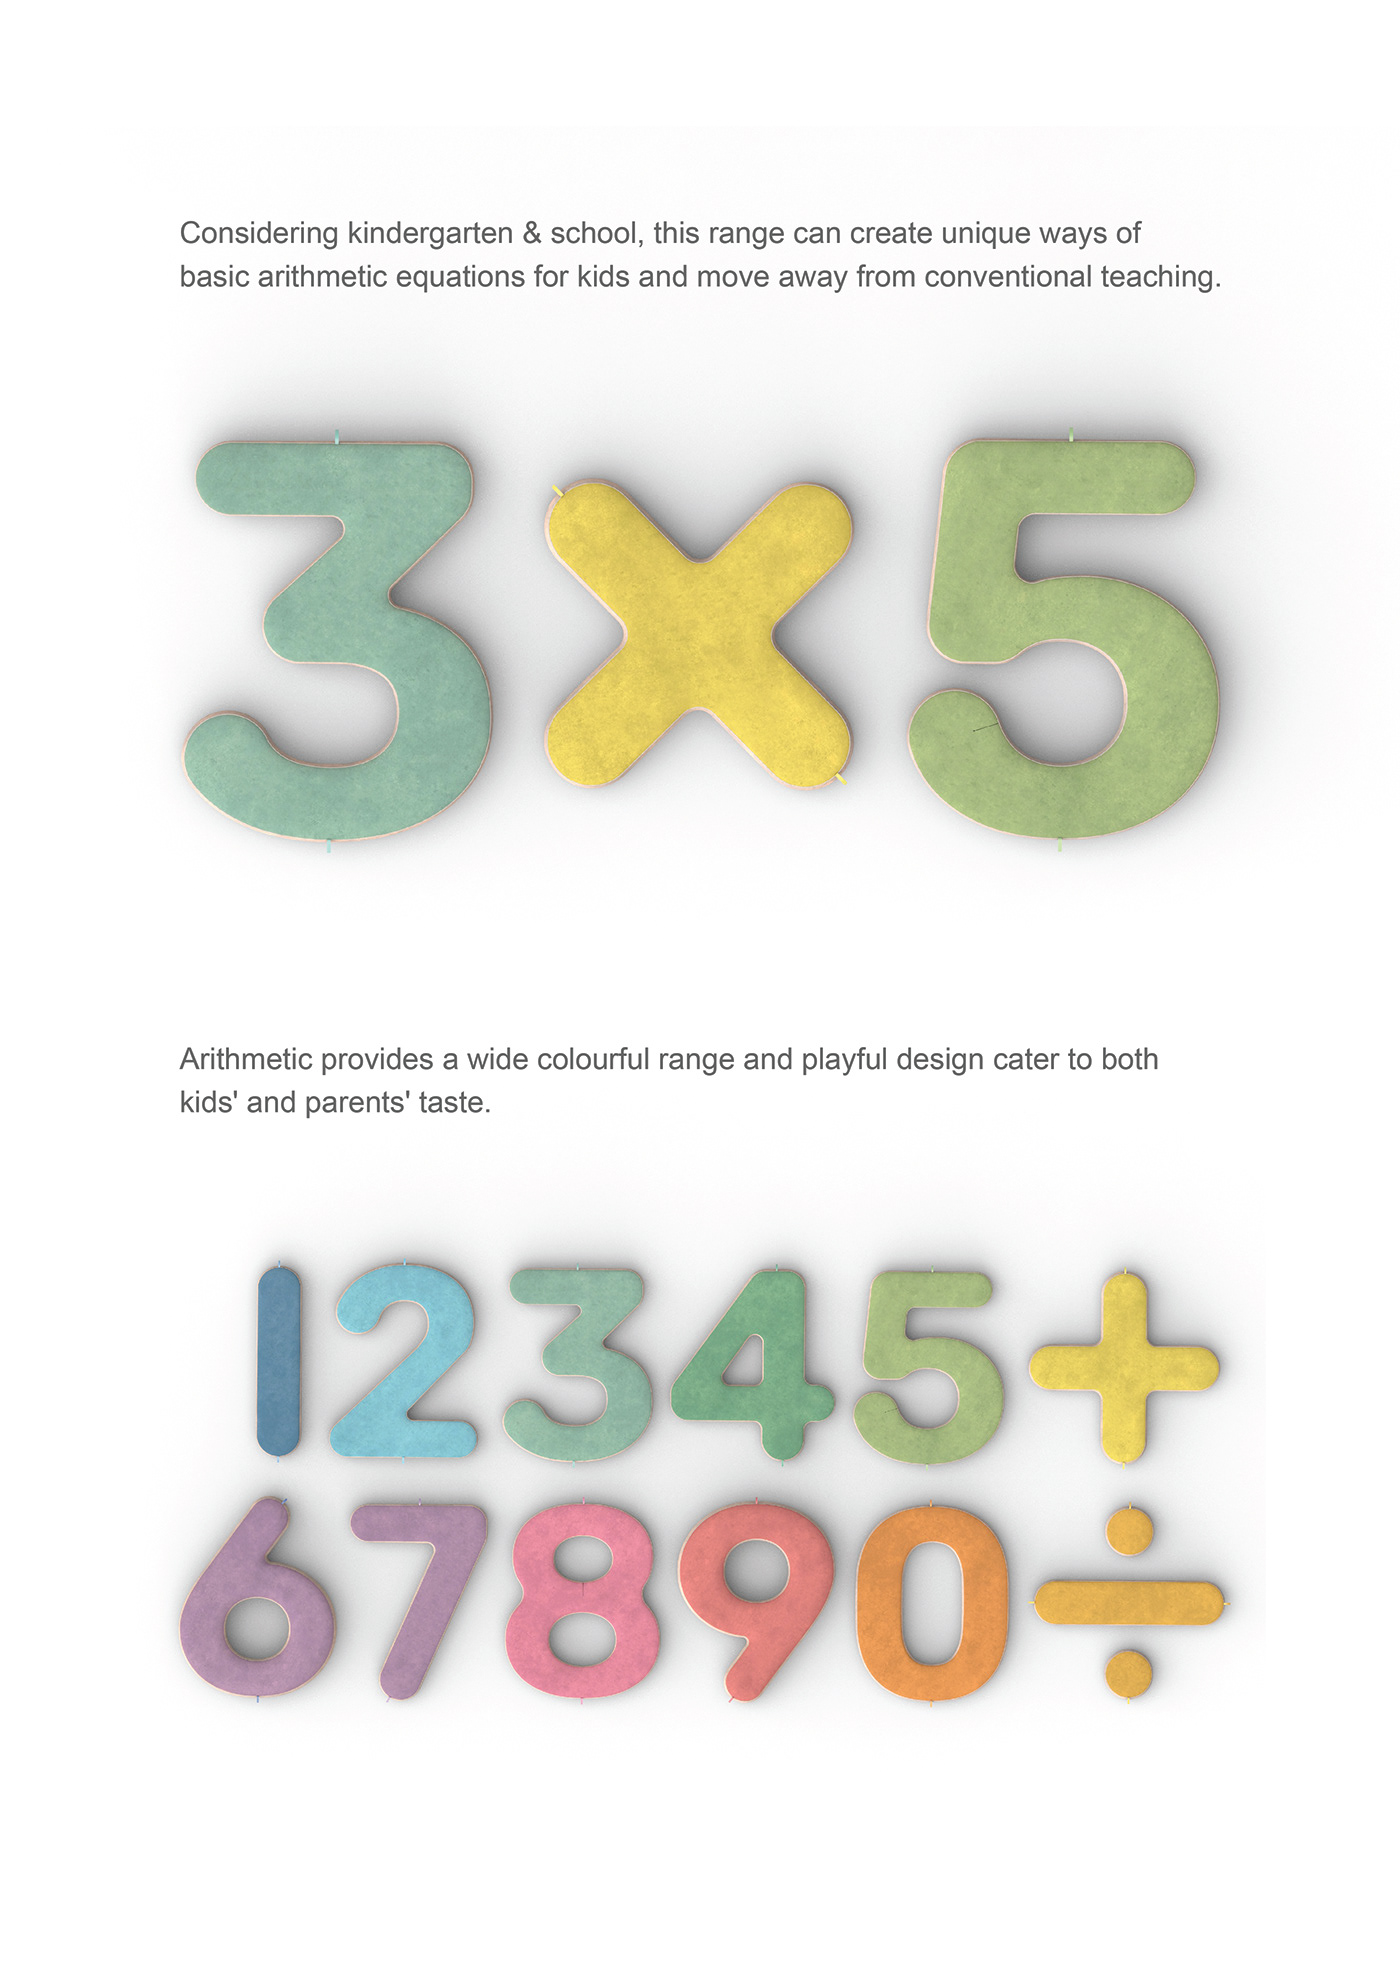 industrial design  product design  kids Fun mathematics